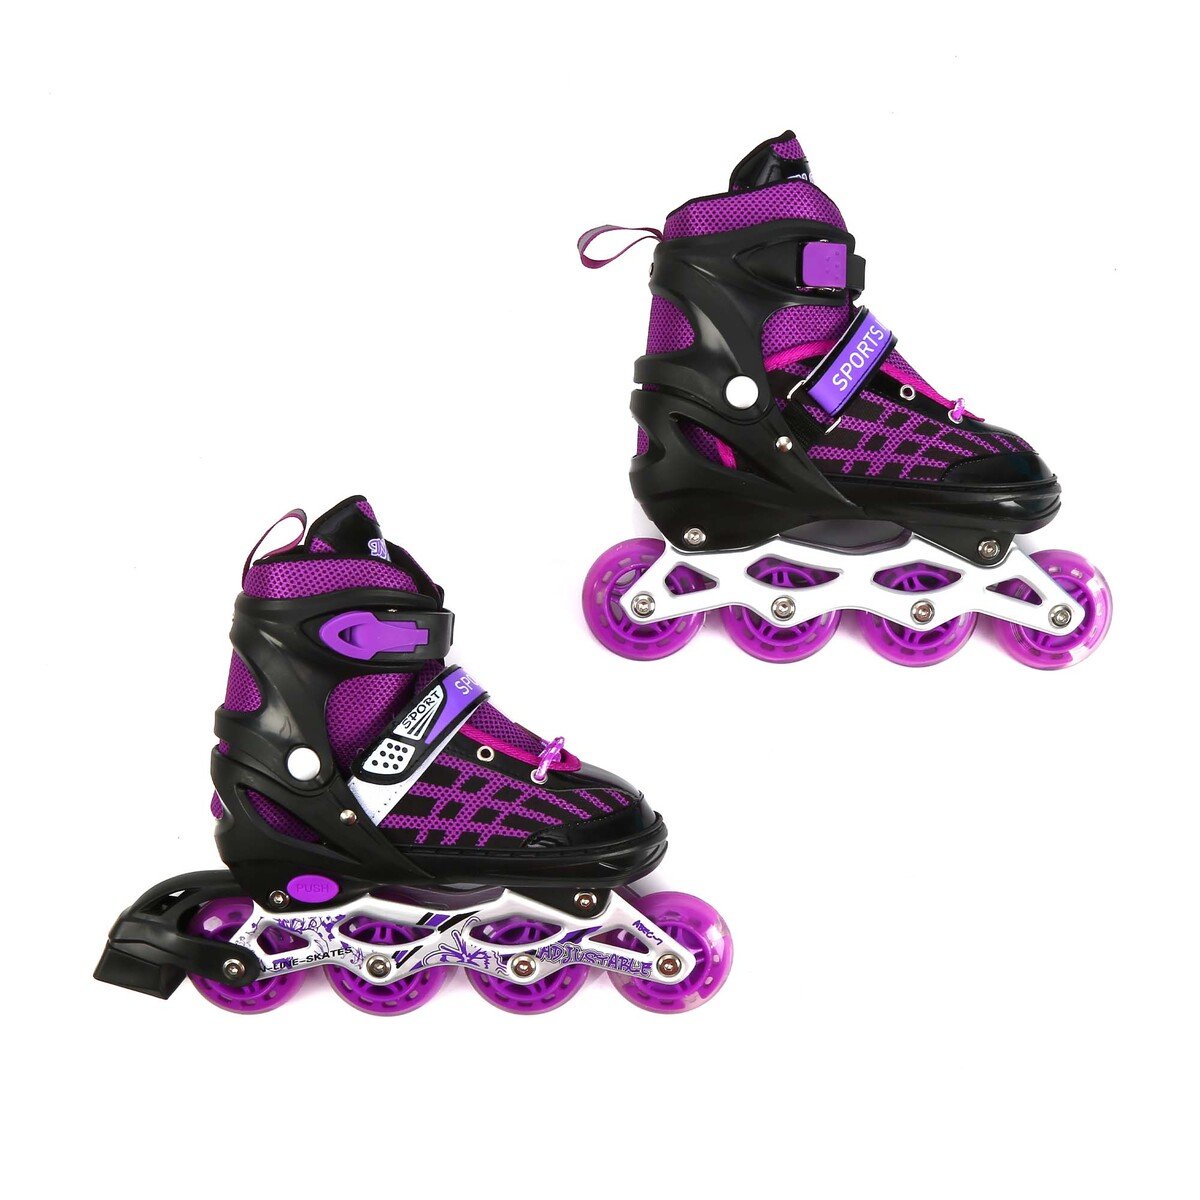 Sports Inc Inline Skate Shoe Kids Size 39-43 126B Large Assorted Color